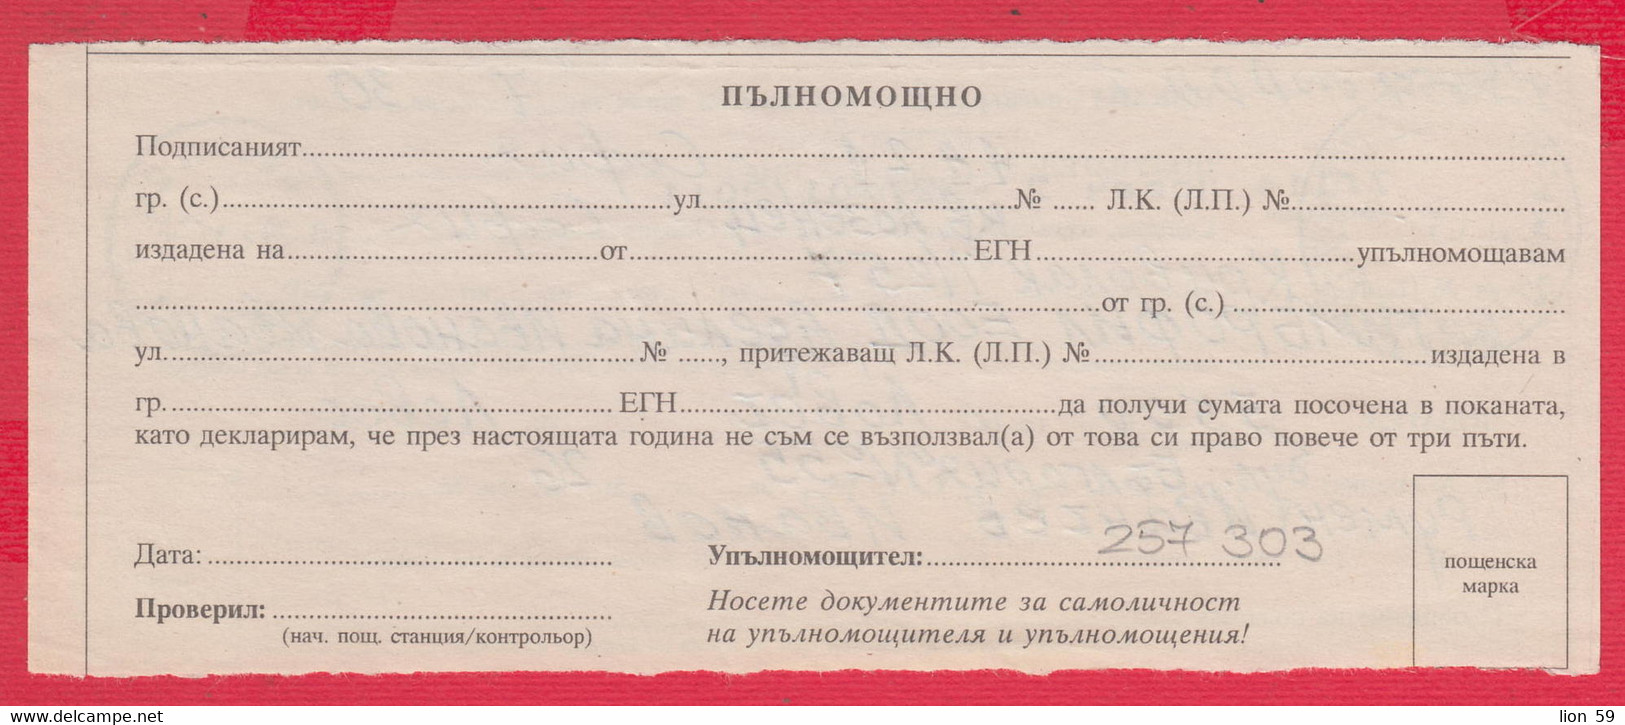 257303 / Bulgaria 2011 - Invitation - Confirmation For Postal Money Order , Lovech - Sofia 21 , Bulgarie Bulgarien - Covers & Documents